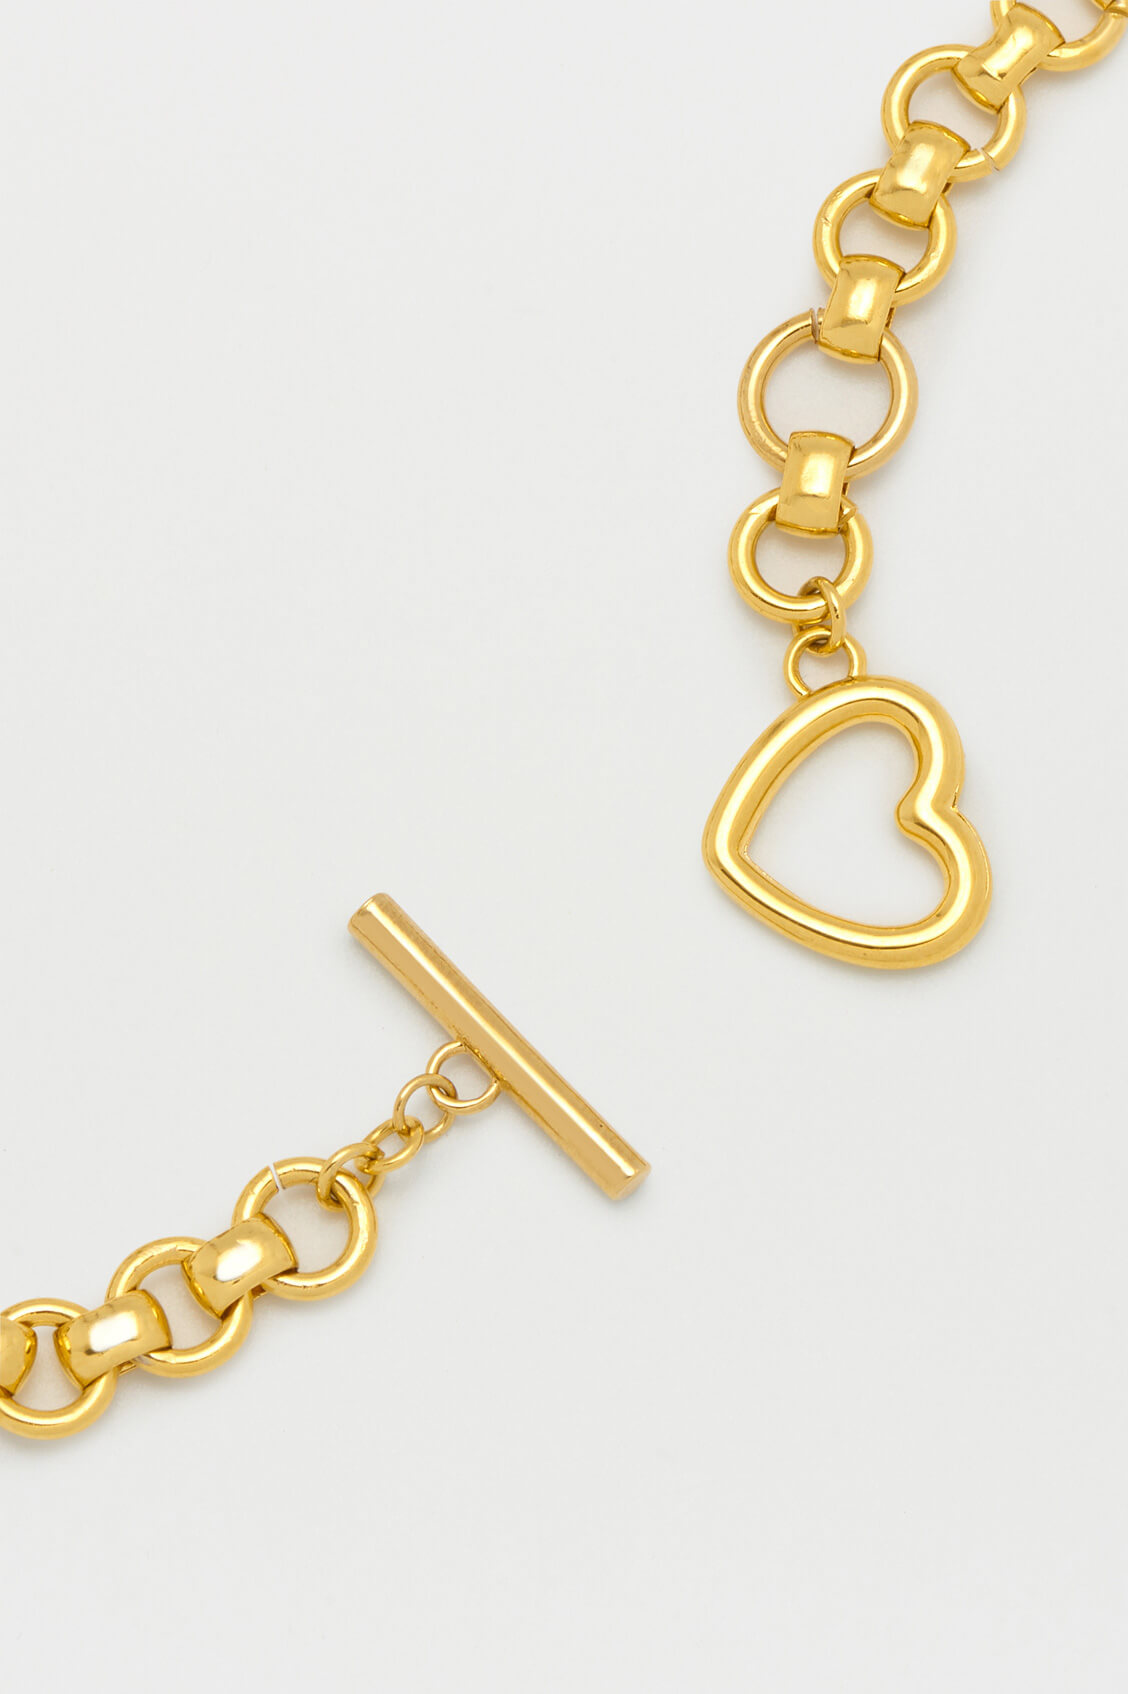 Heart T-Bar Link Chain Bracelet